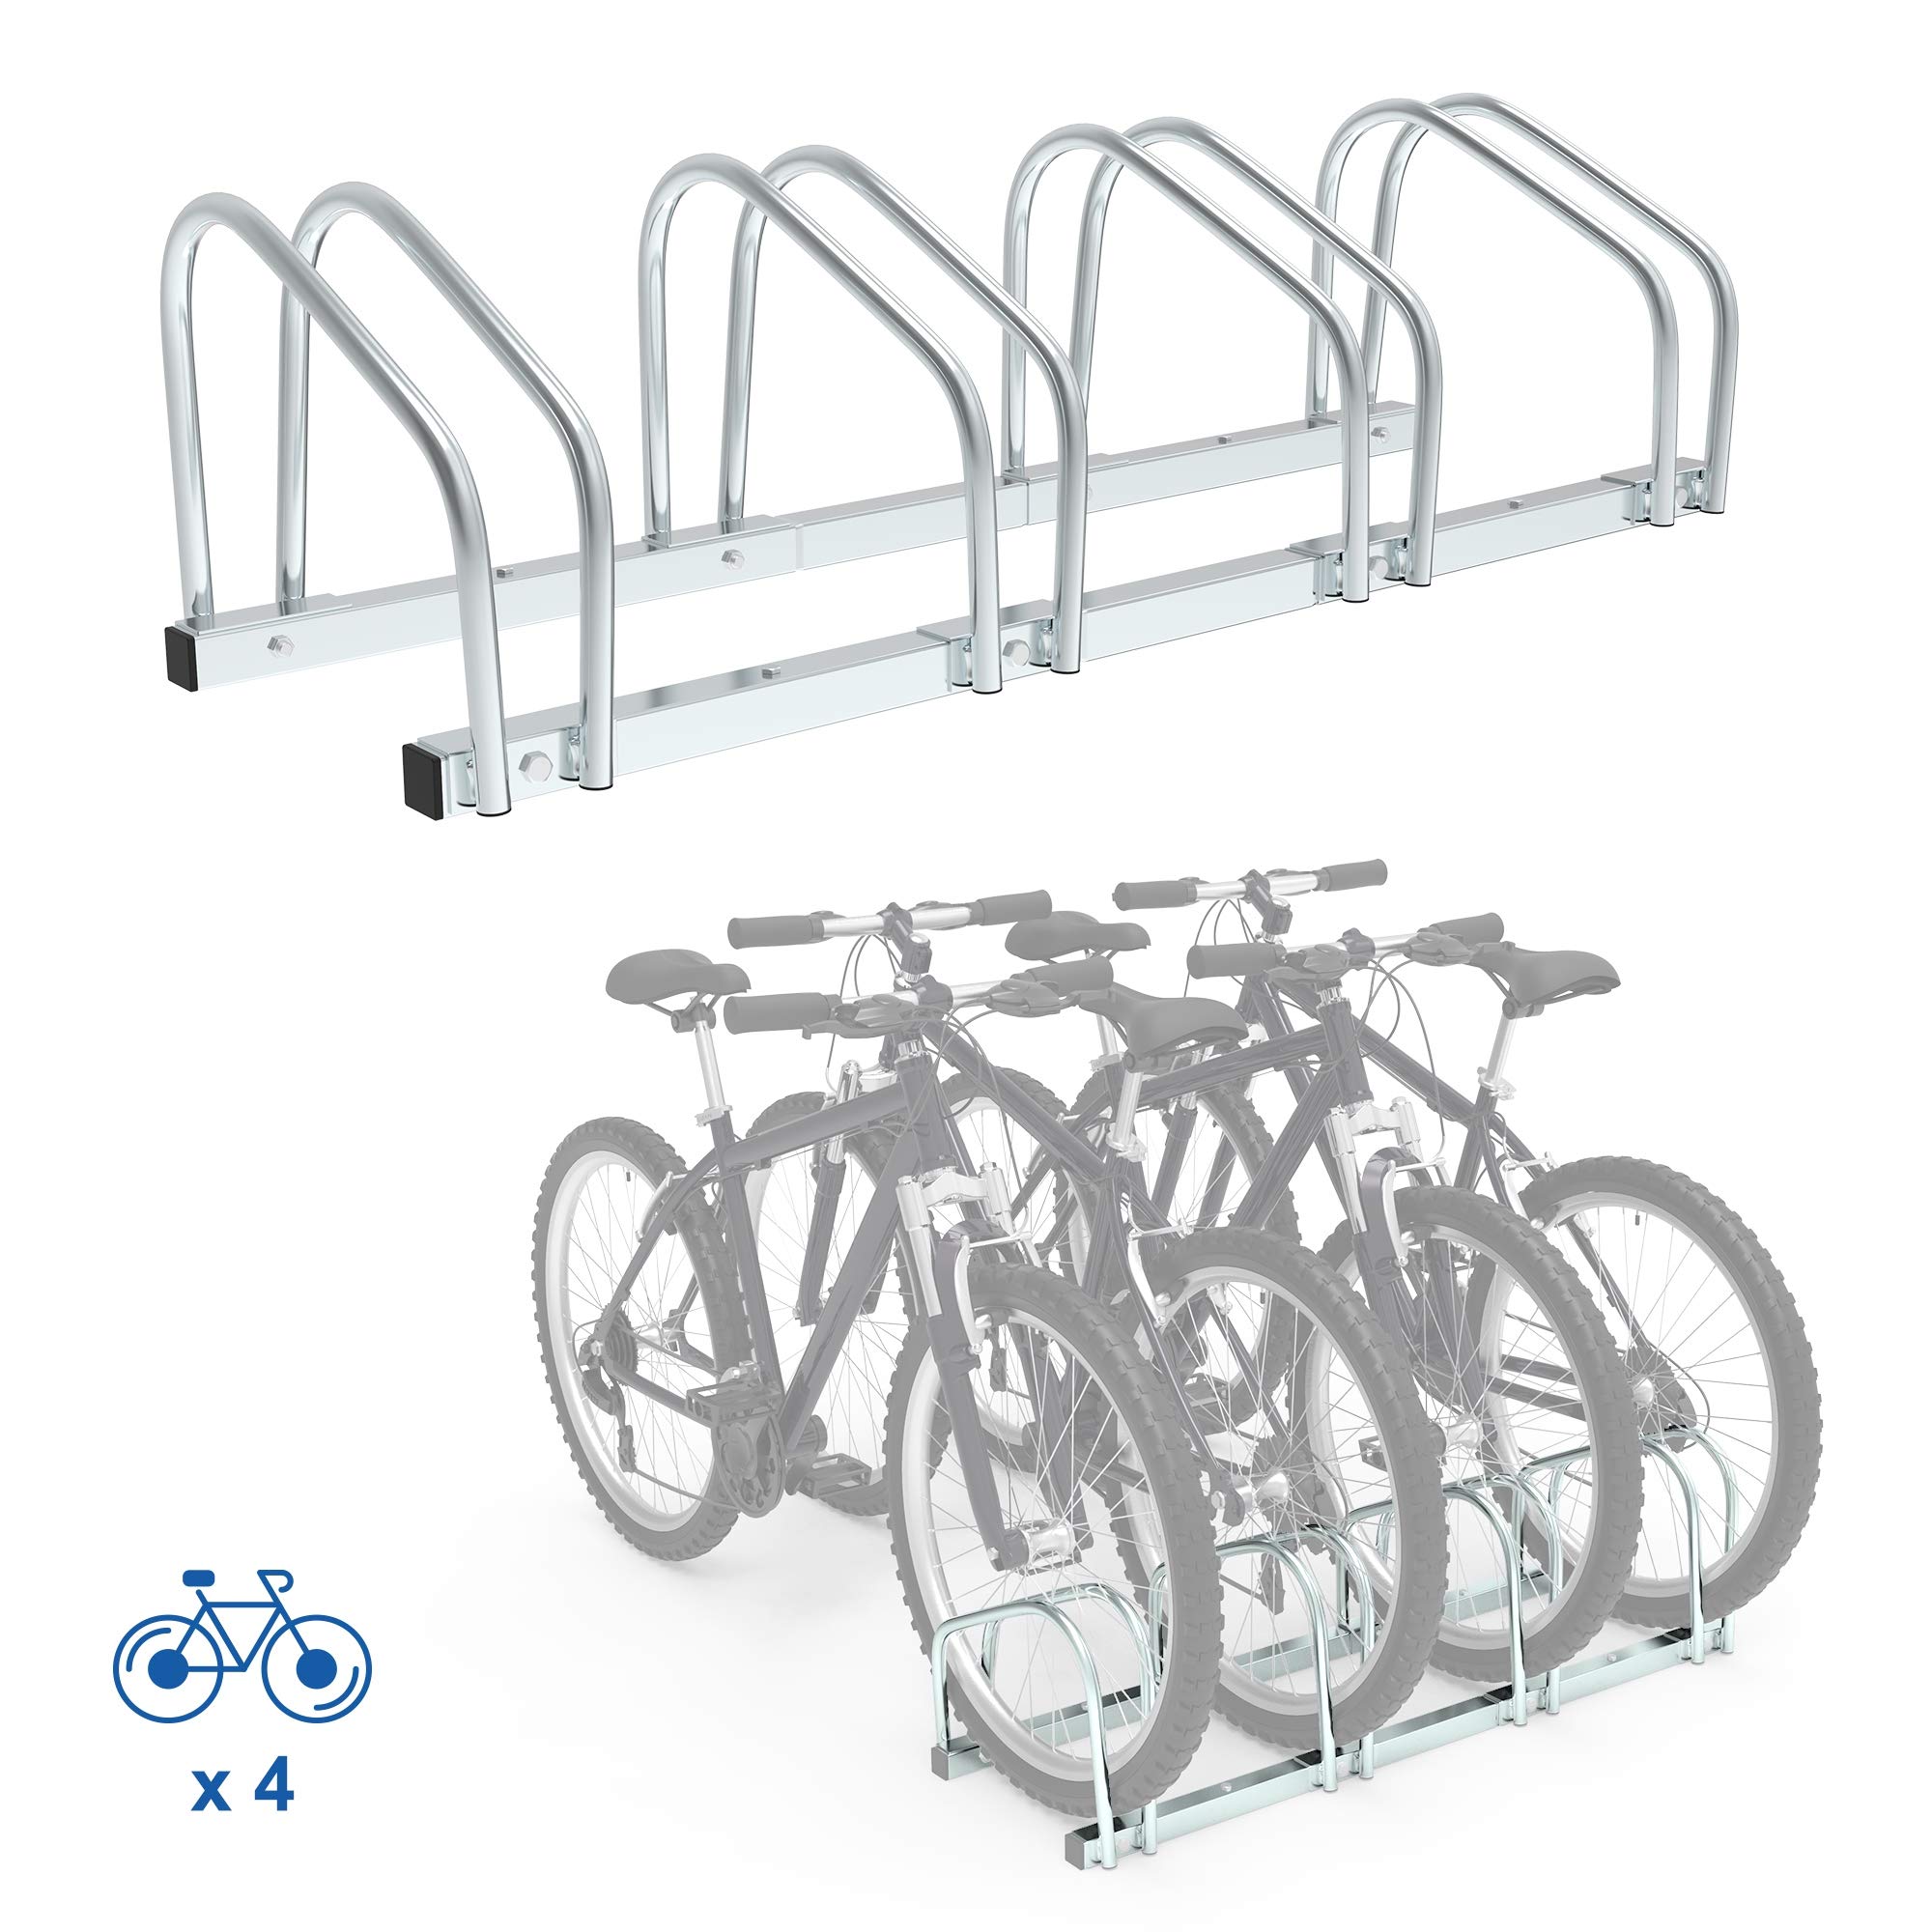 Todeco Bike Floor Rack Stand for 4 Bikes